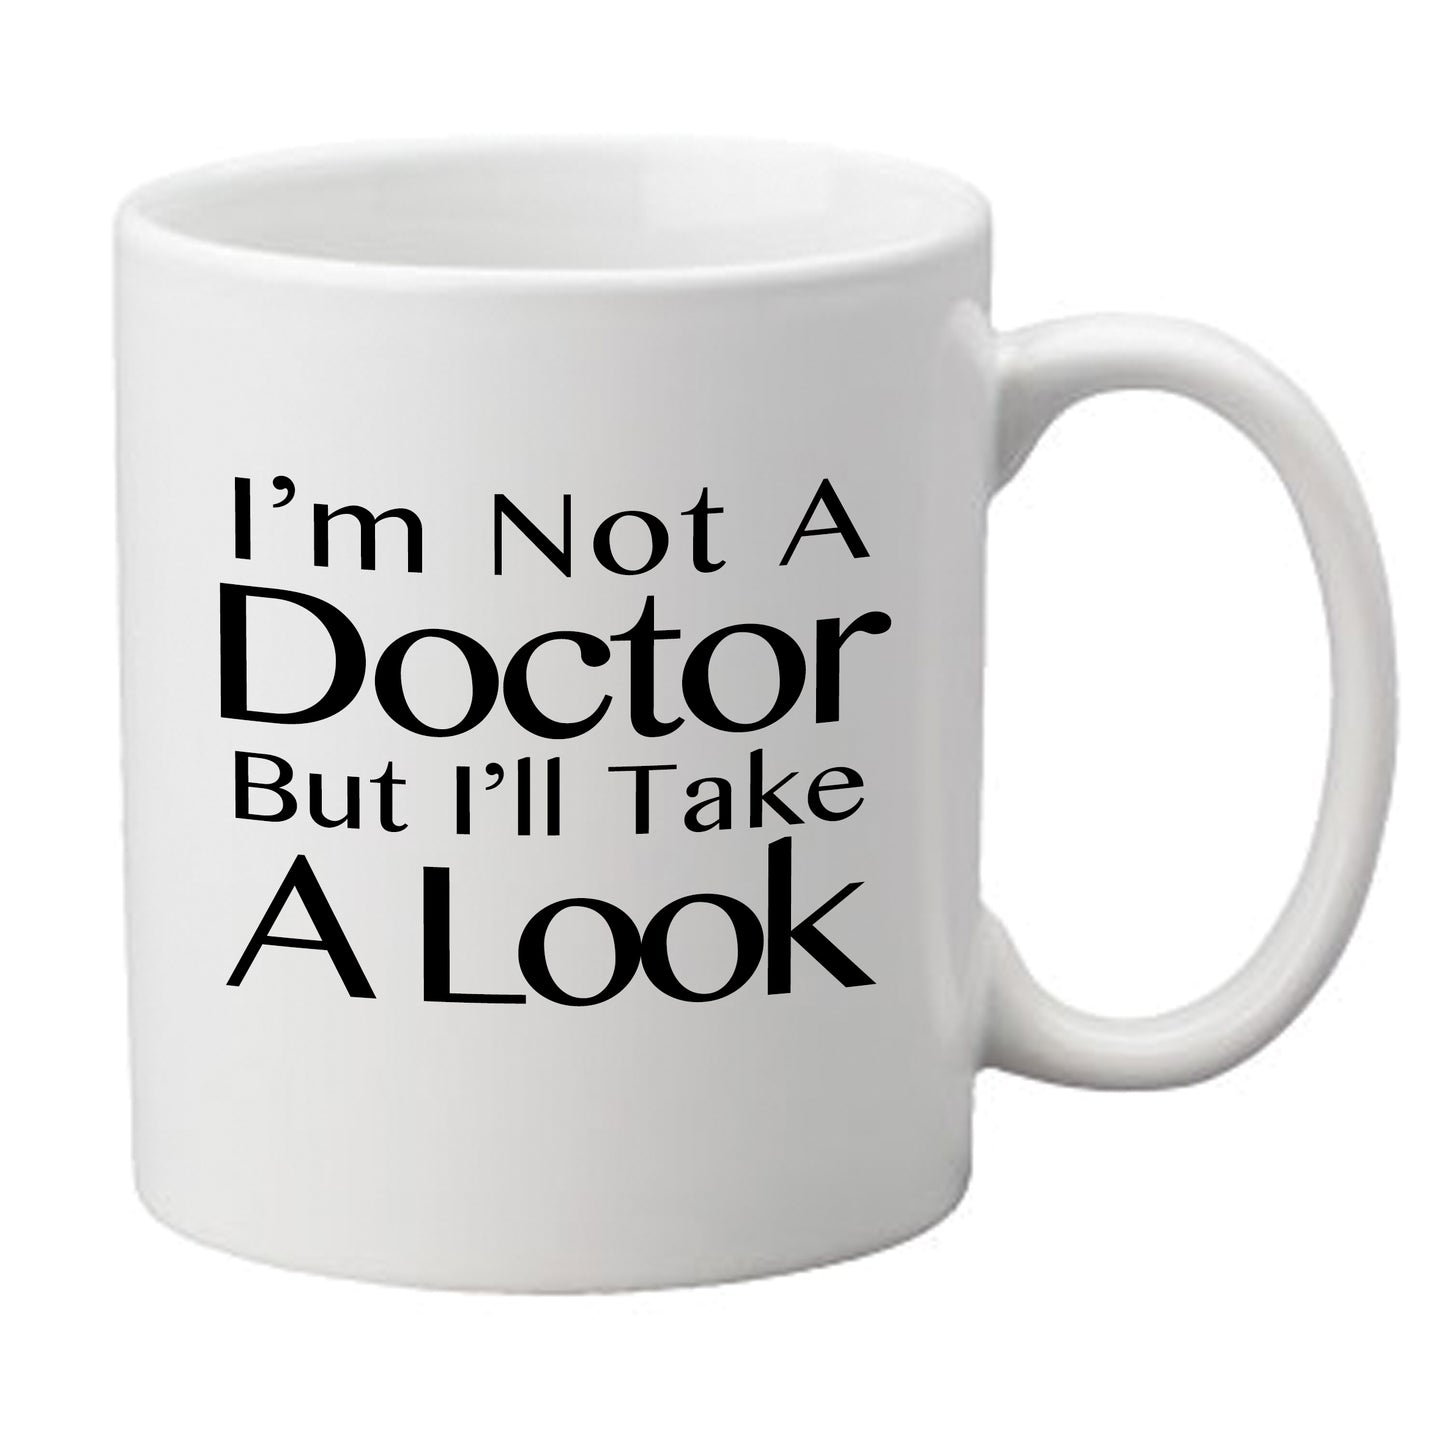 'I'm Not a Doctor...' Mug